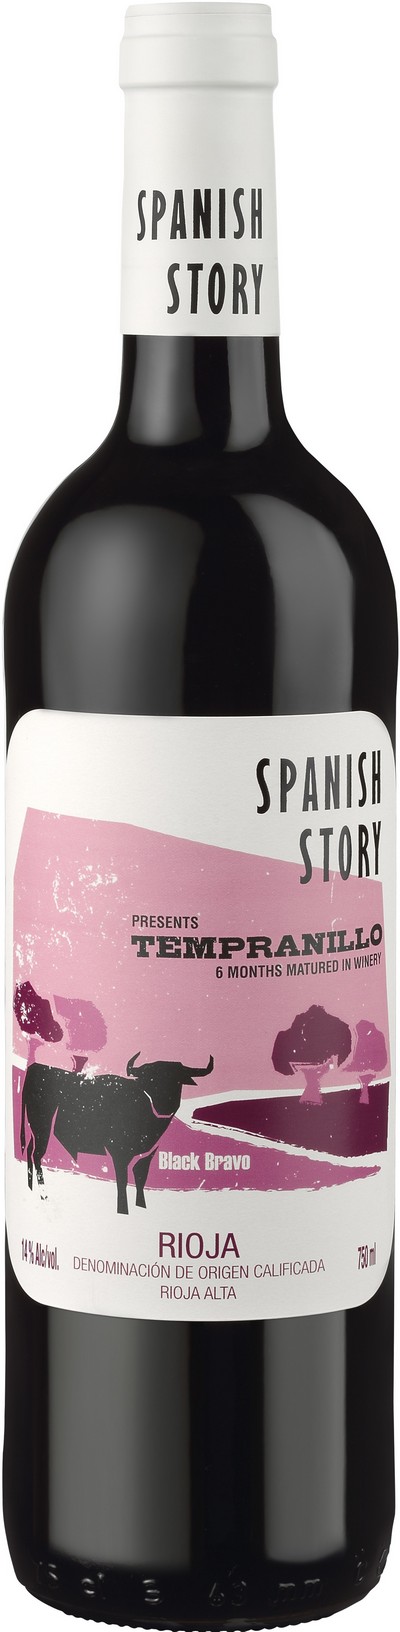 spanish-story-tempranillo-2014